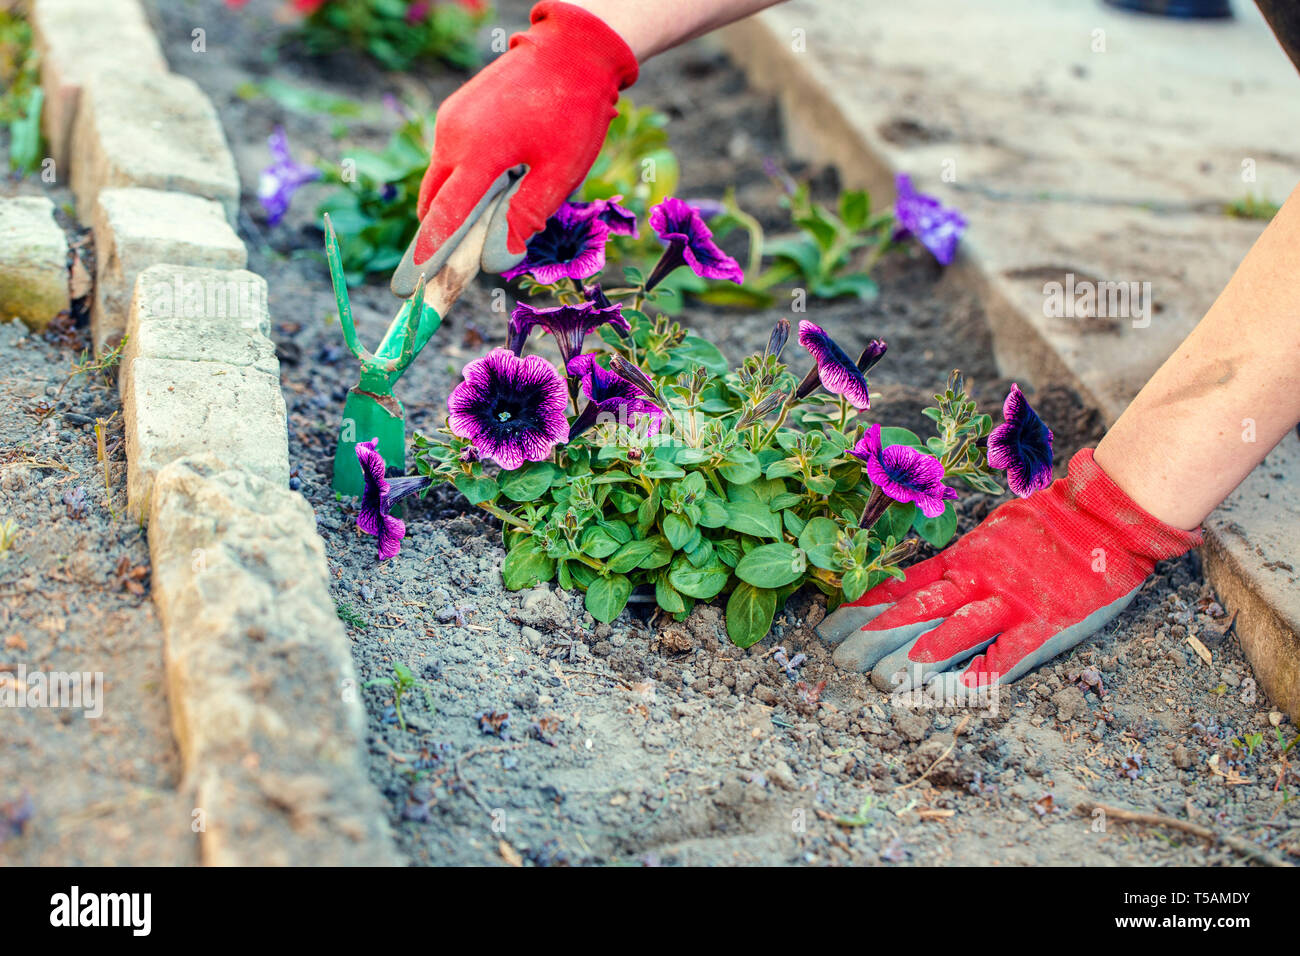 Gardener hands planting flowers outdoors into soil Stock Photo